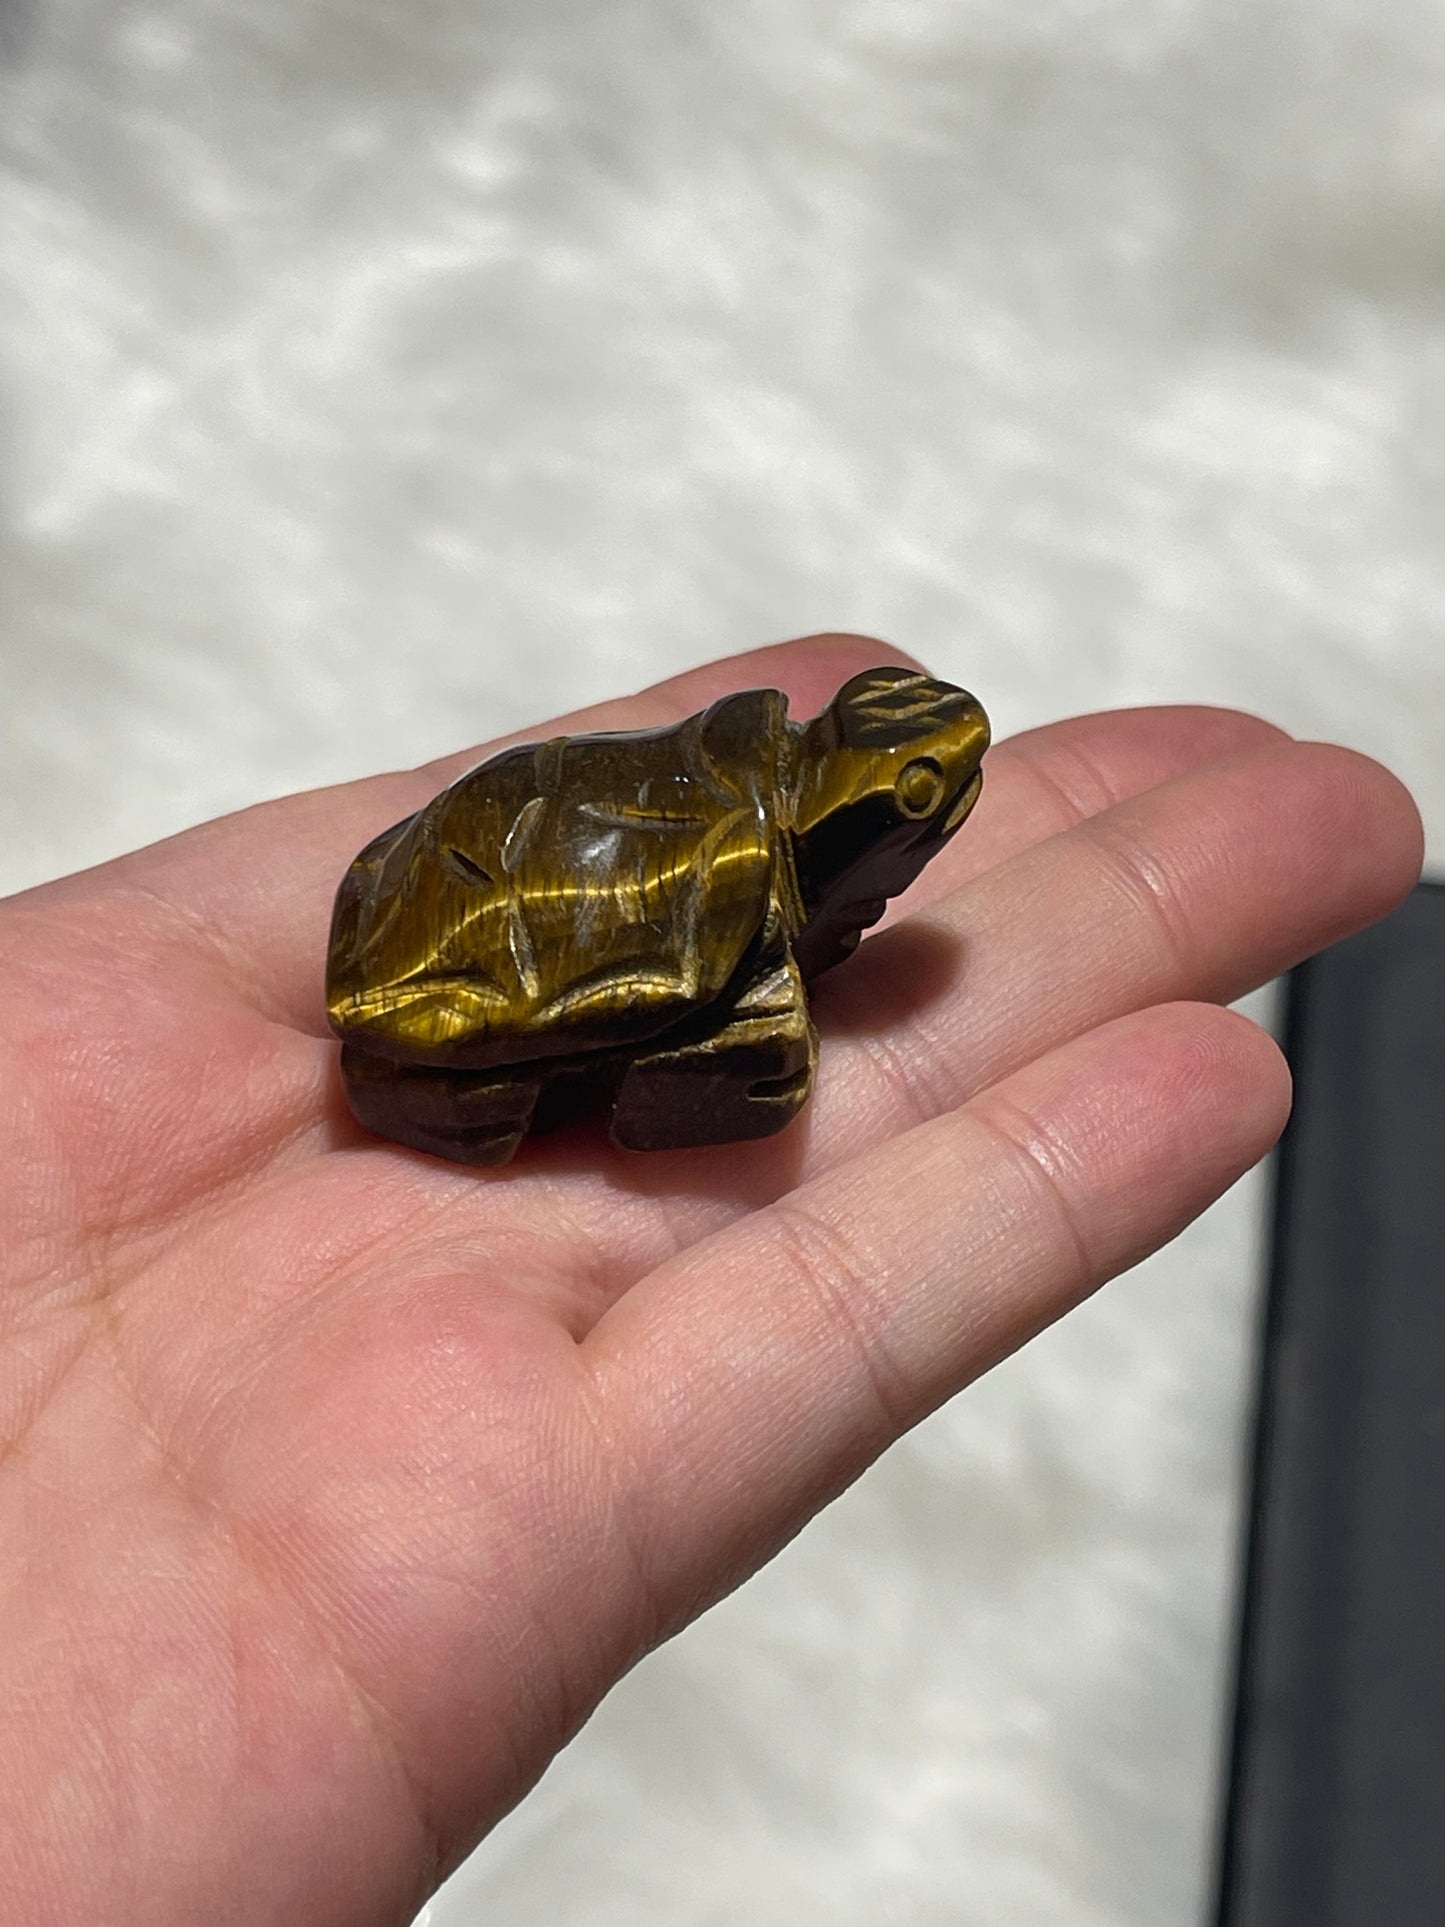 1.5 inch Crystal Turtle Stone Animal